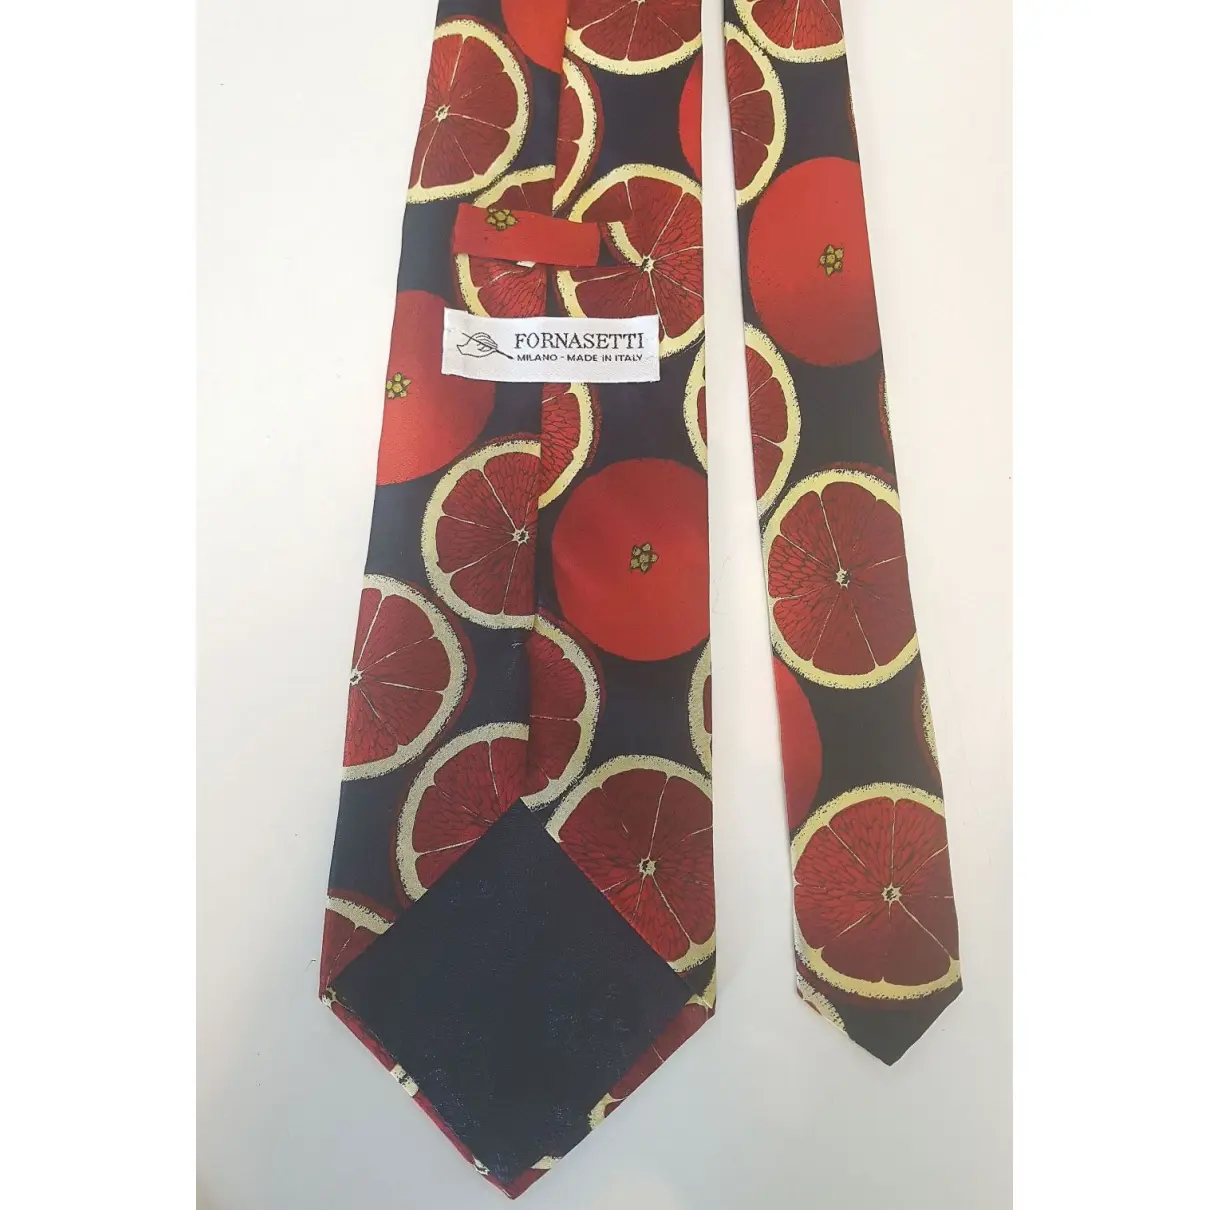 Buy Fornasetti Silk tie online - Vintage